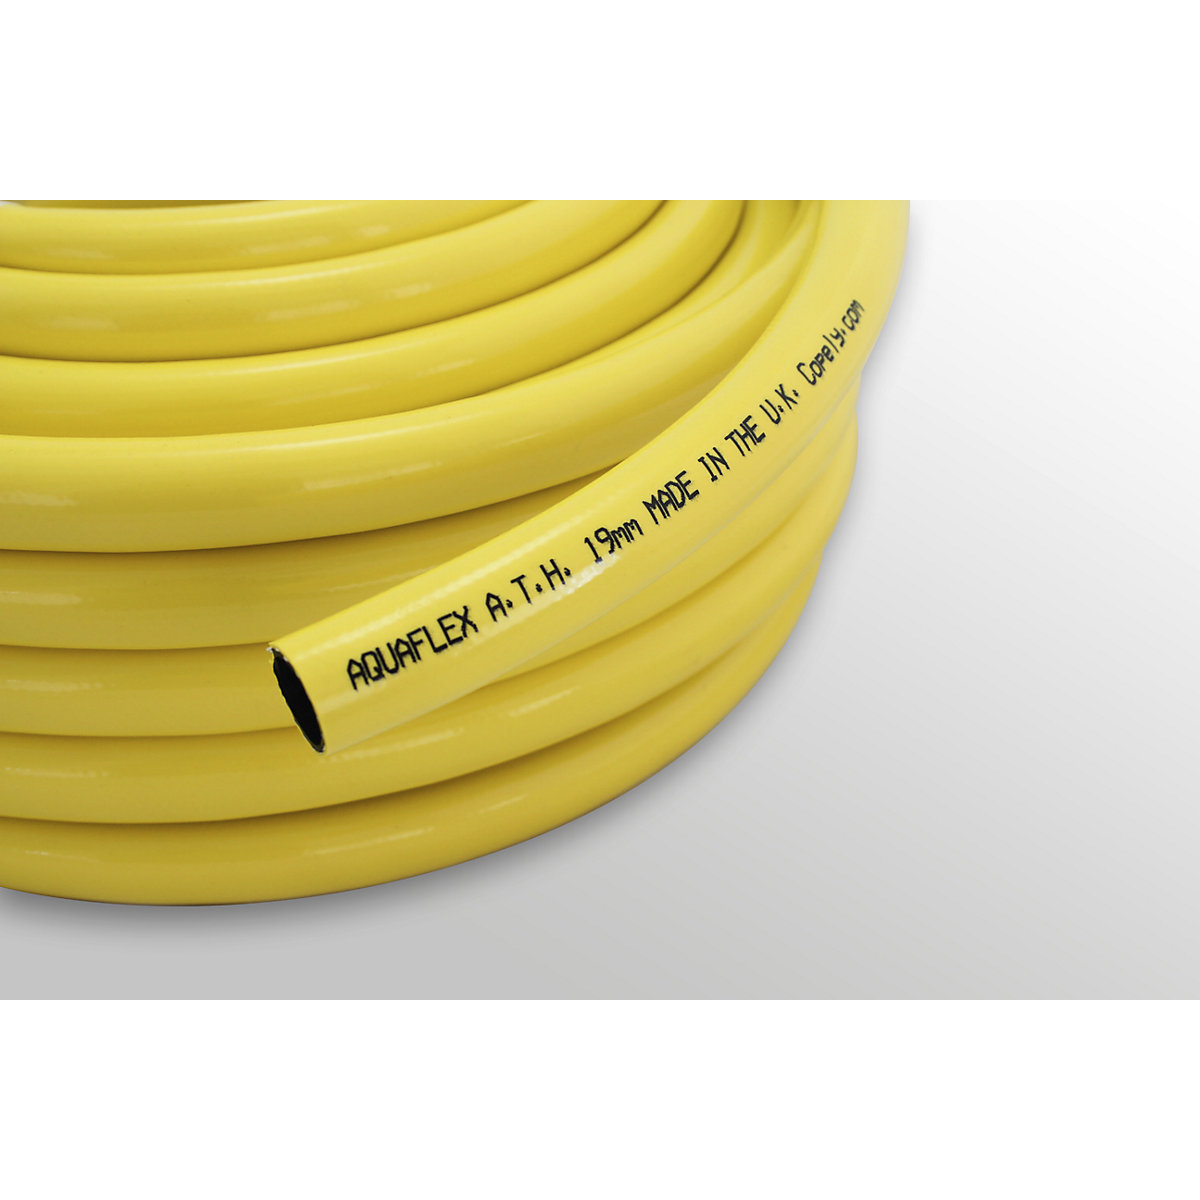 Water hose made of PVC, yellow – COBA